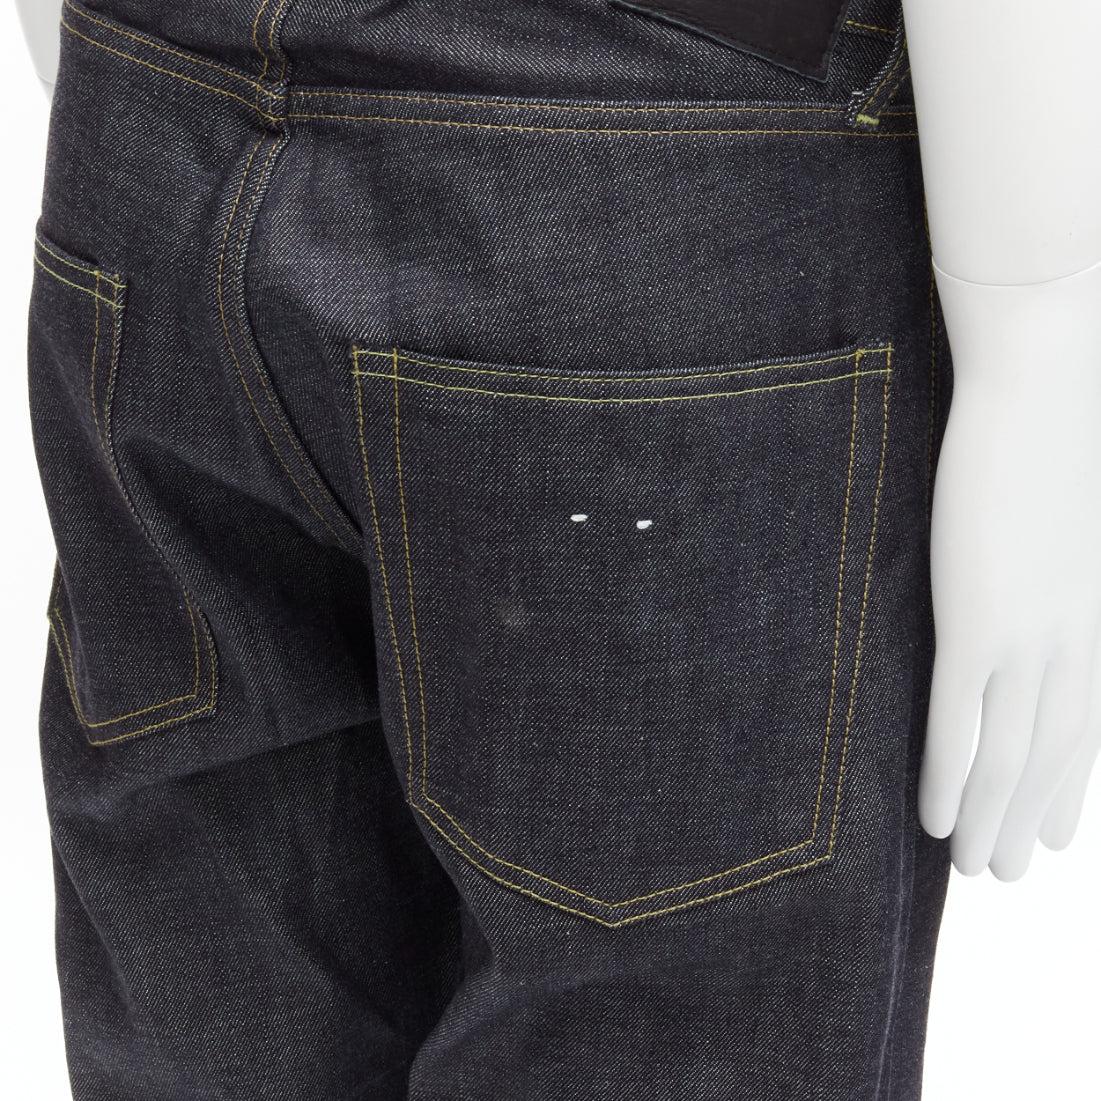 VISVIM 05R dark navy 3D back yoke white stitches pocket selvedge denim pants 34